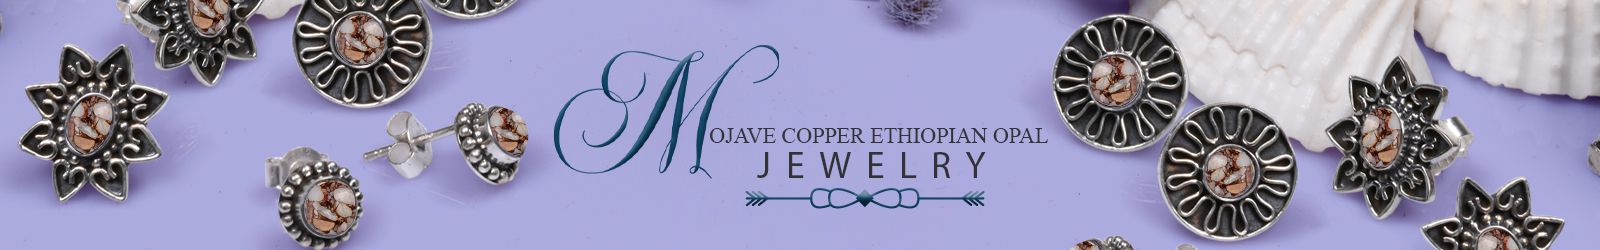 Silver Mojave Copper Ethiopian Opal Jewelry Wholesale Supplier